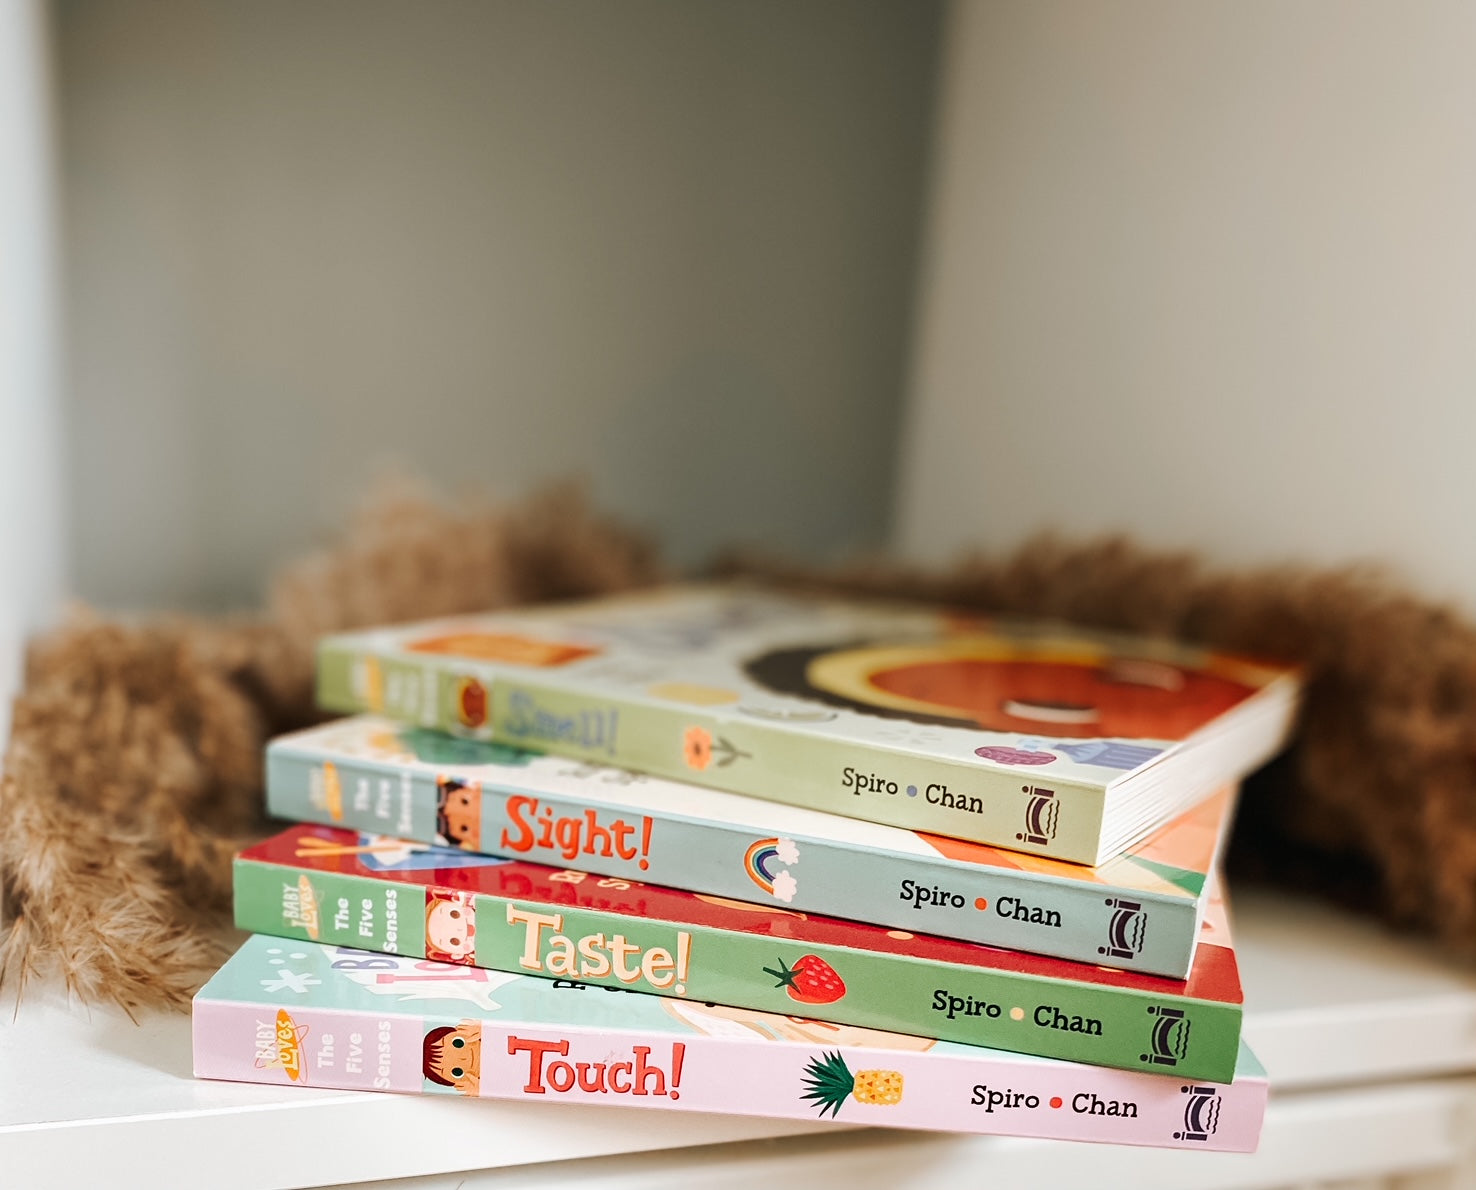 Baby Loves The Five Senses Books Series